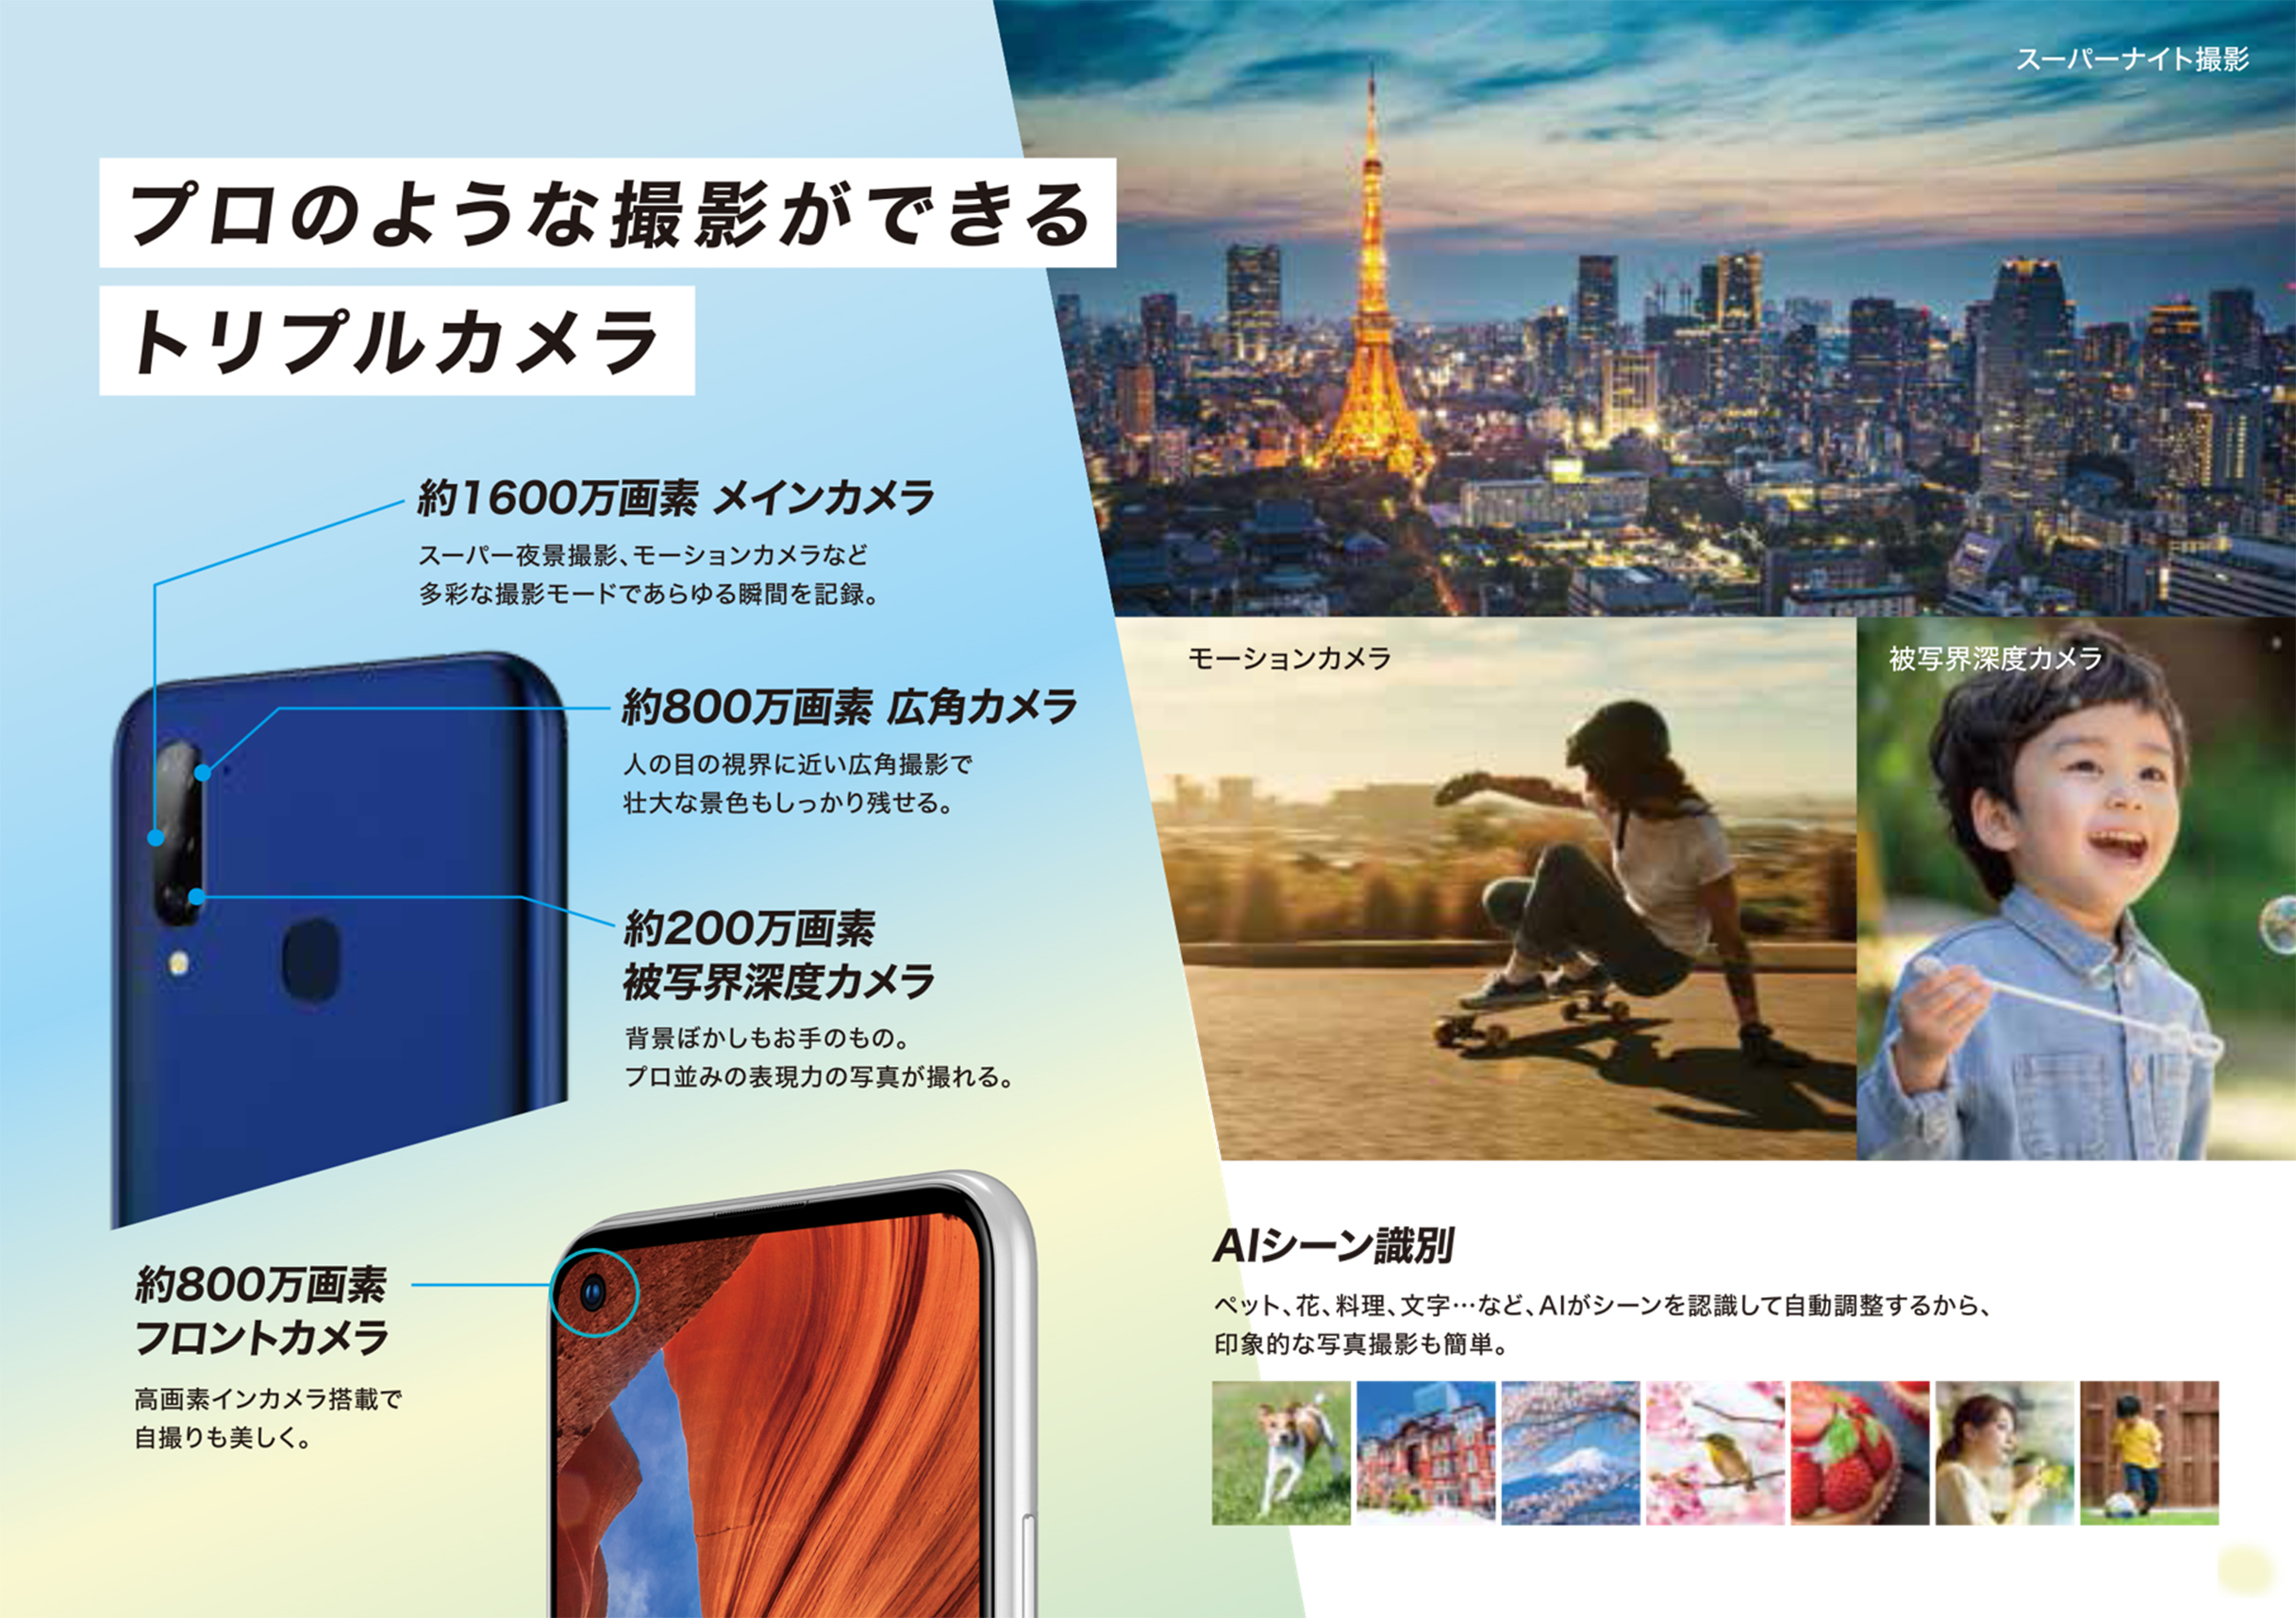 Libero 5G – ZTE Device Japan